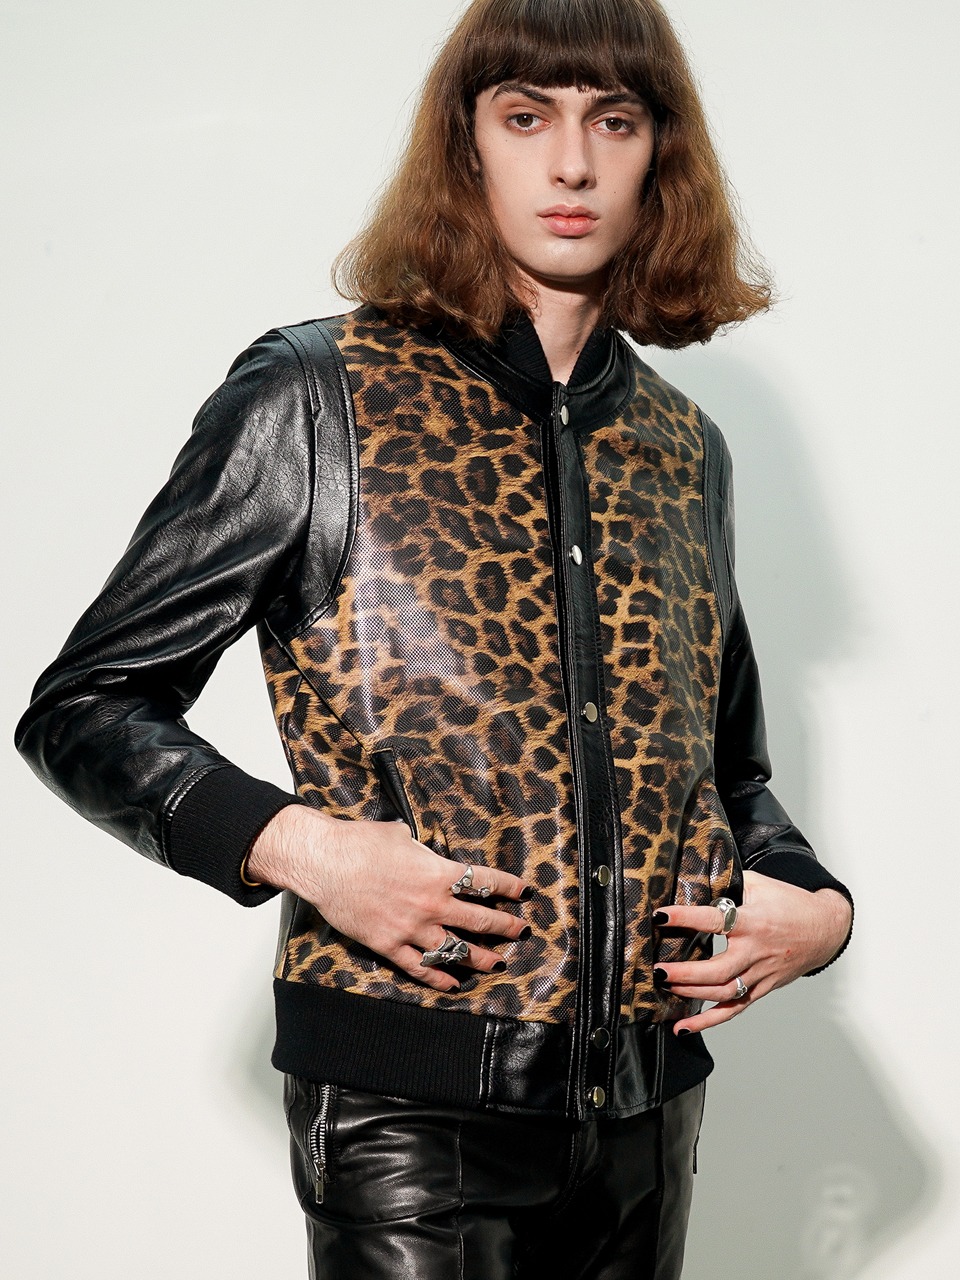 Leopard-Printed Bomber Jacket (brown)